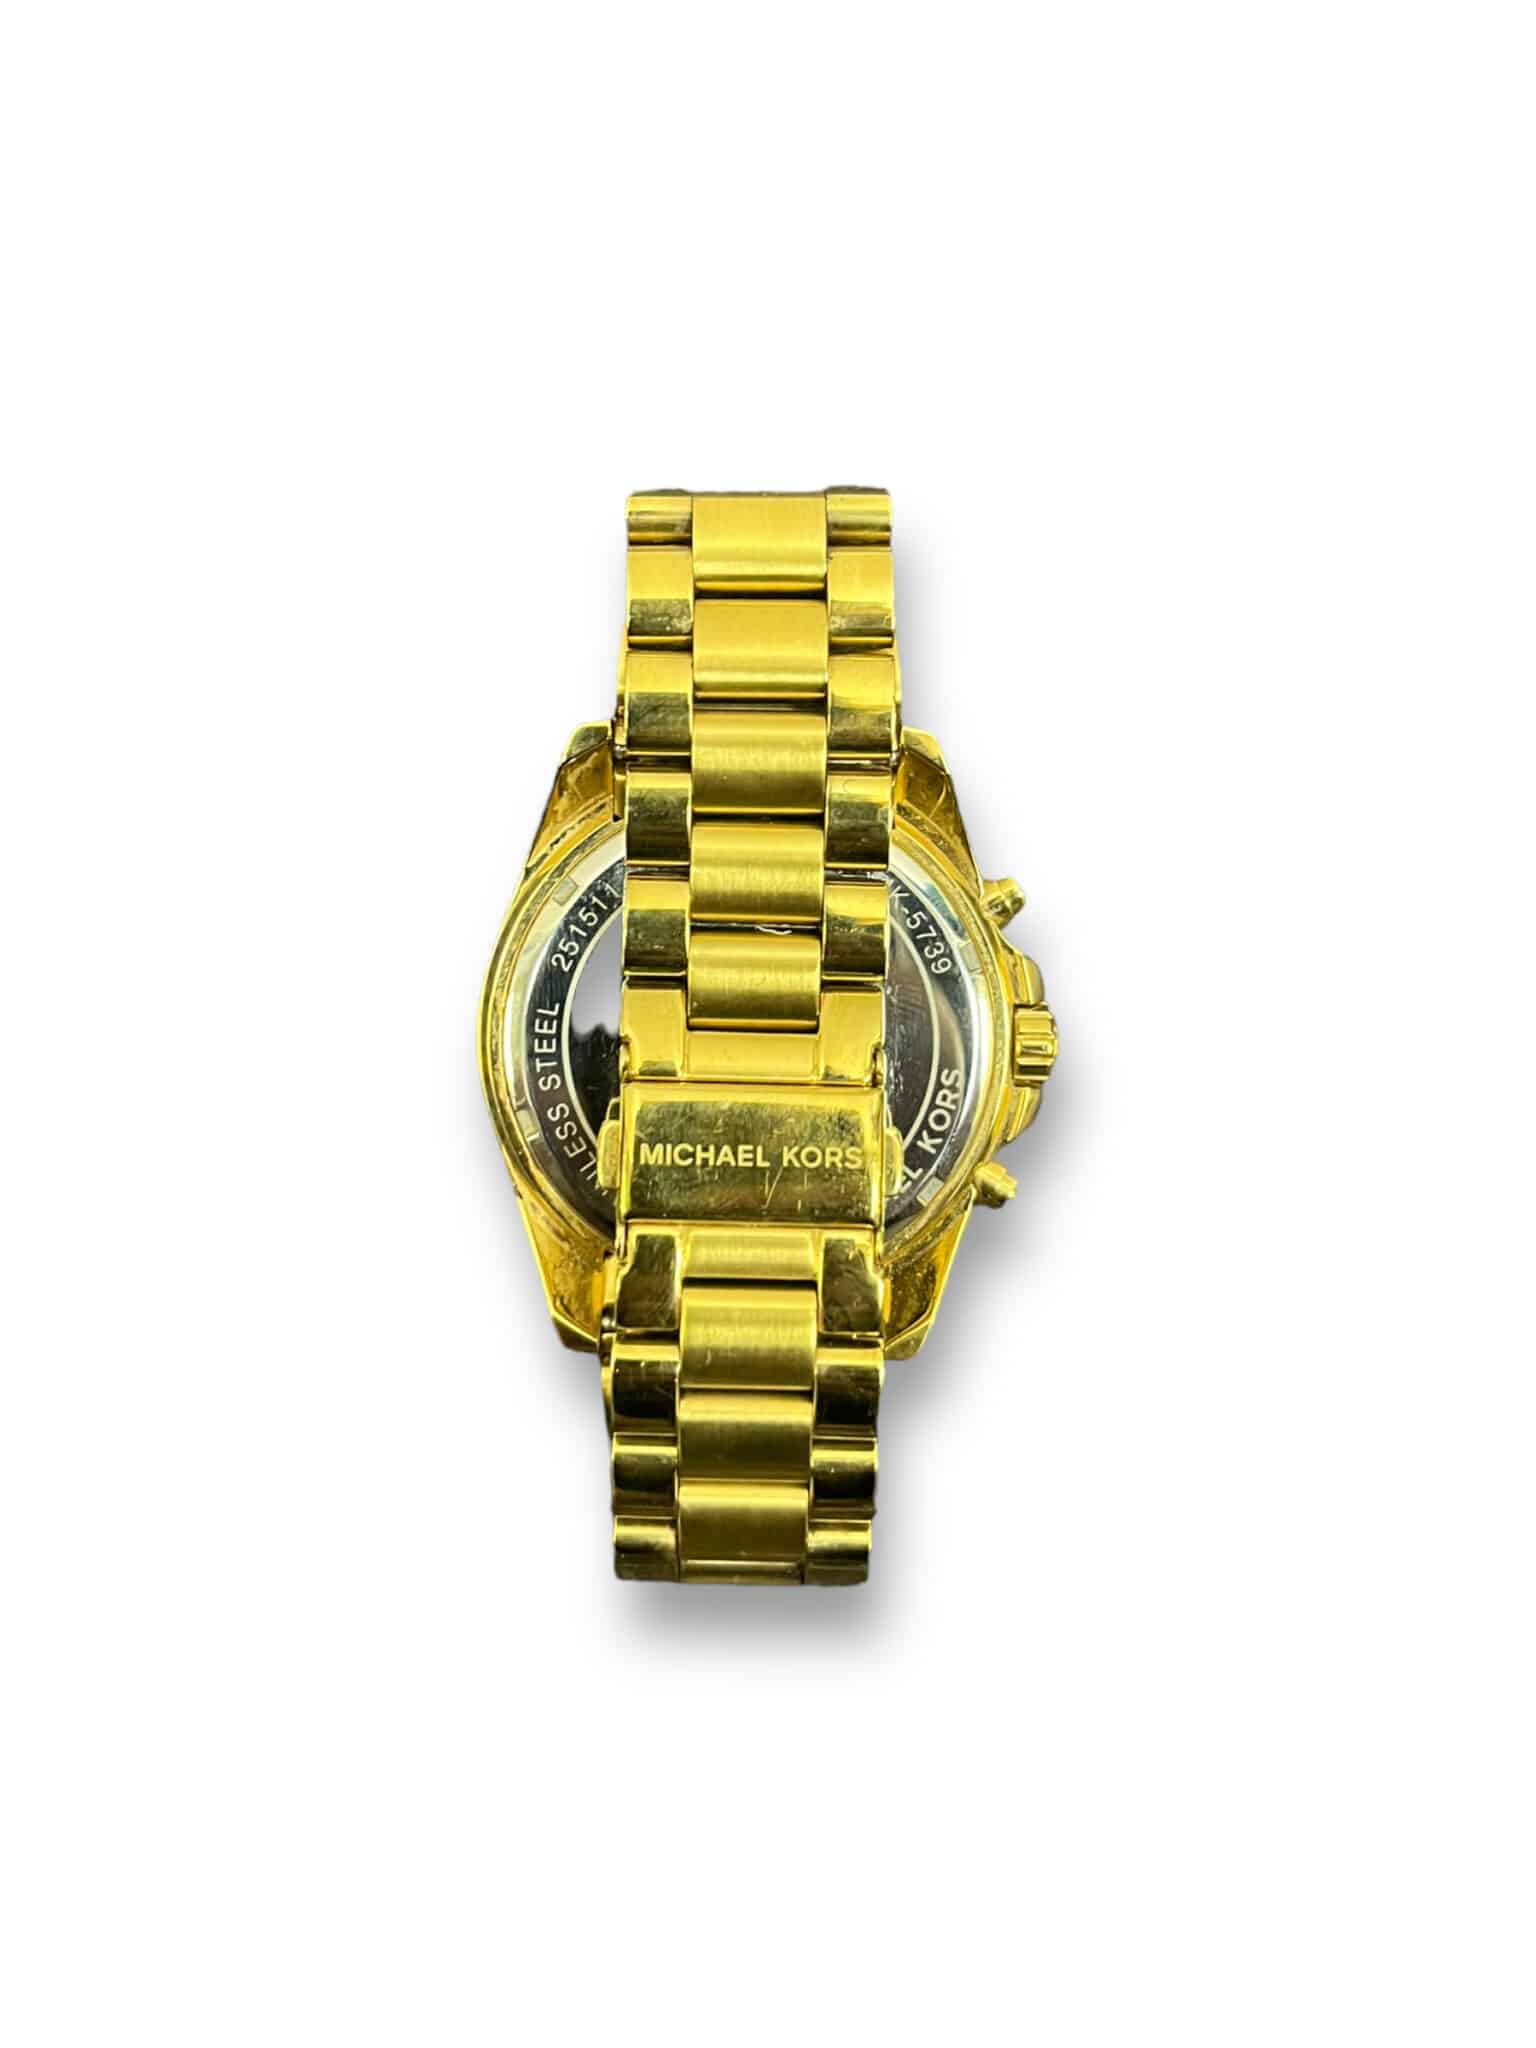 Oiritaly Watch  Quartz  Man  Michael Kors  MK5739  Watches